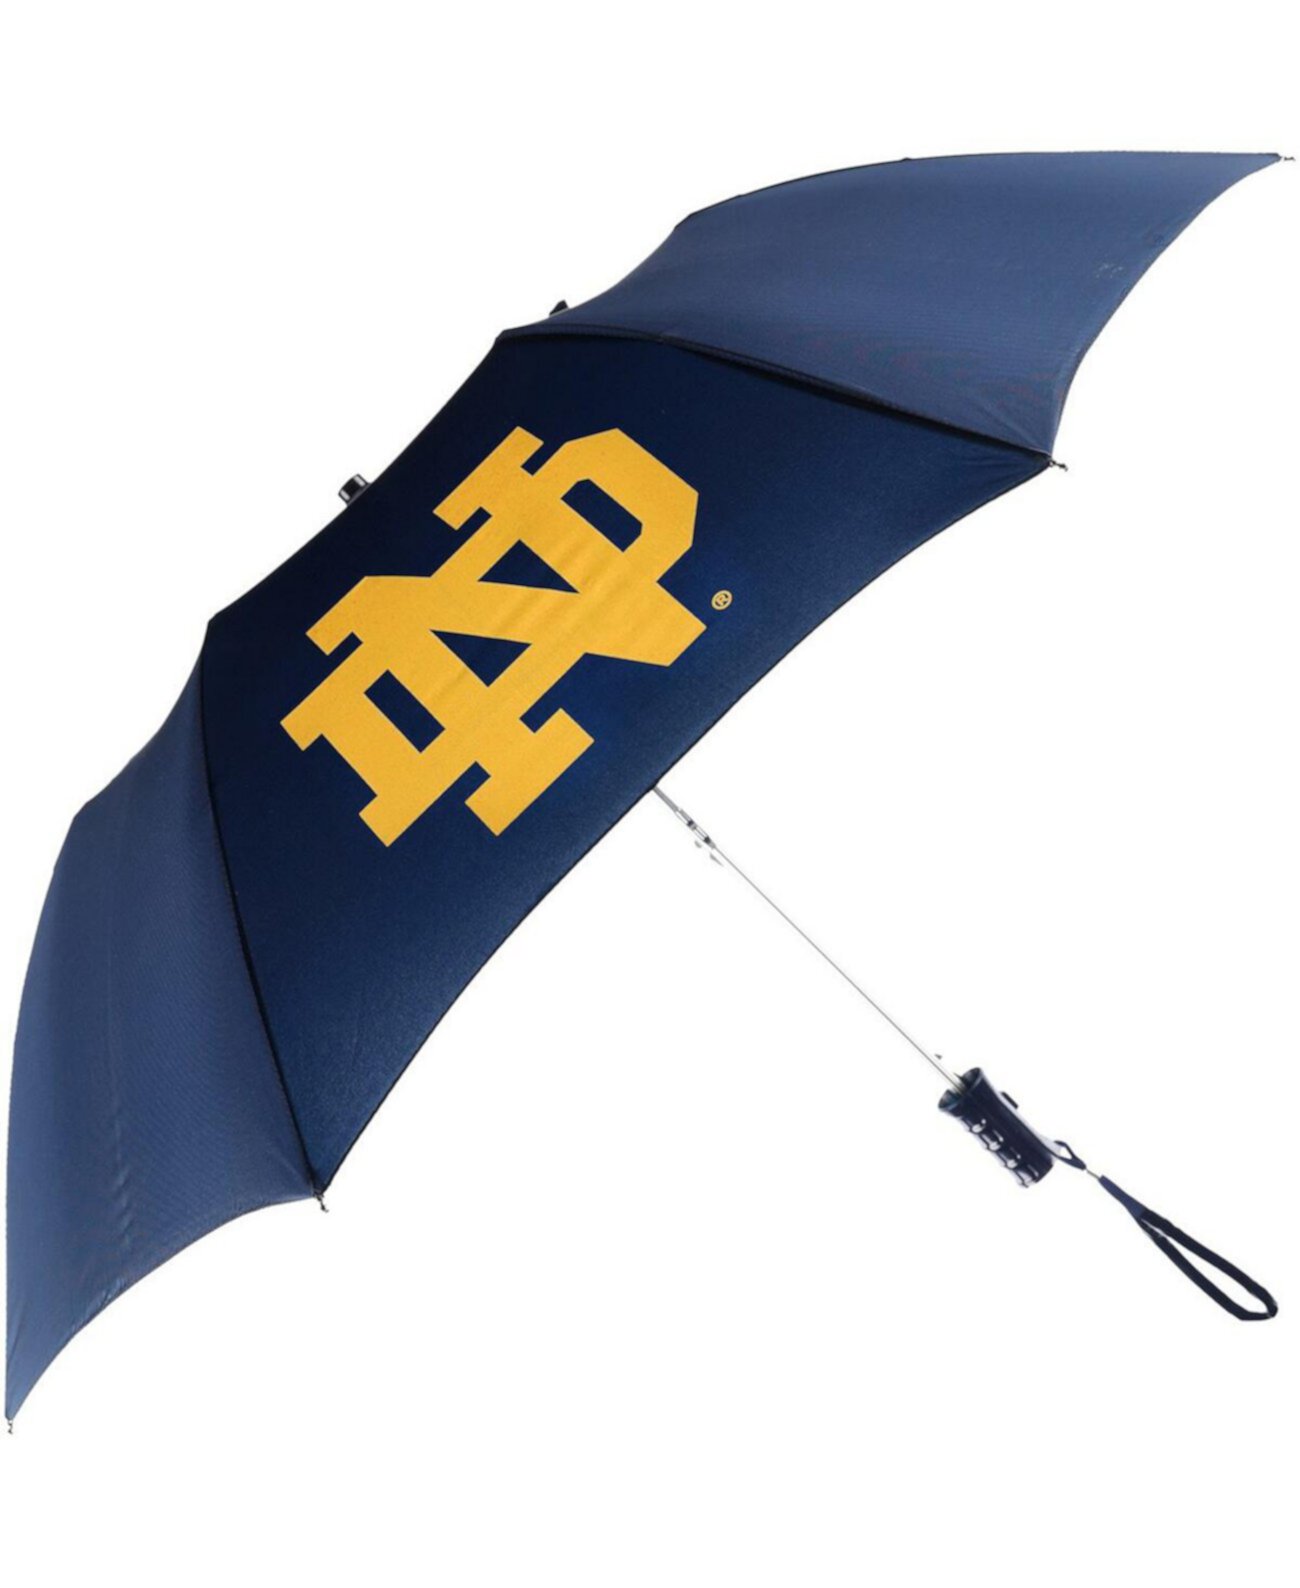 Notre Dame Fighting Irish Classic Auto-Open Umbrella Storm Duds